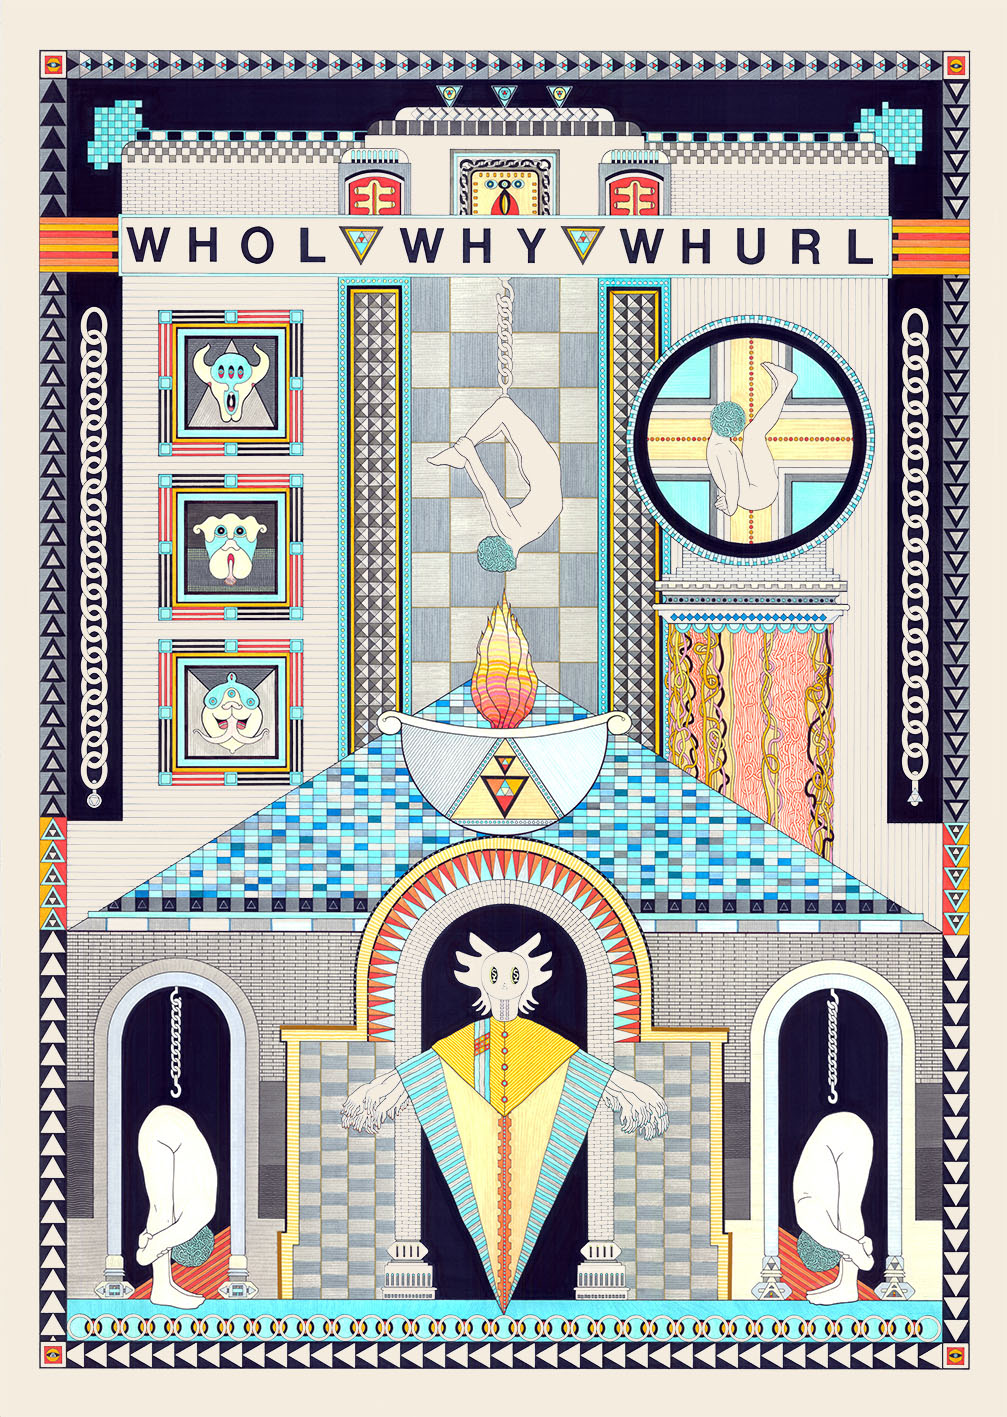 Whol Why Whurl, 2013